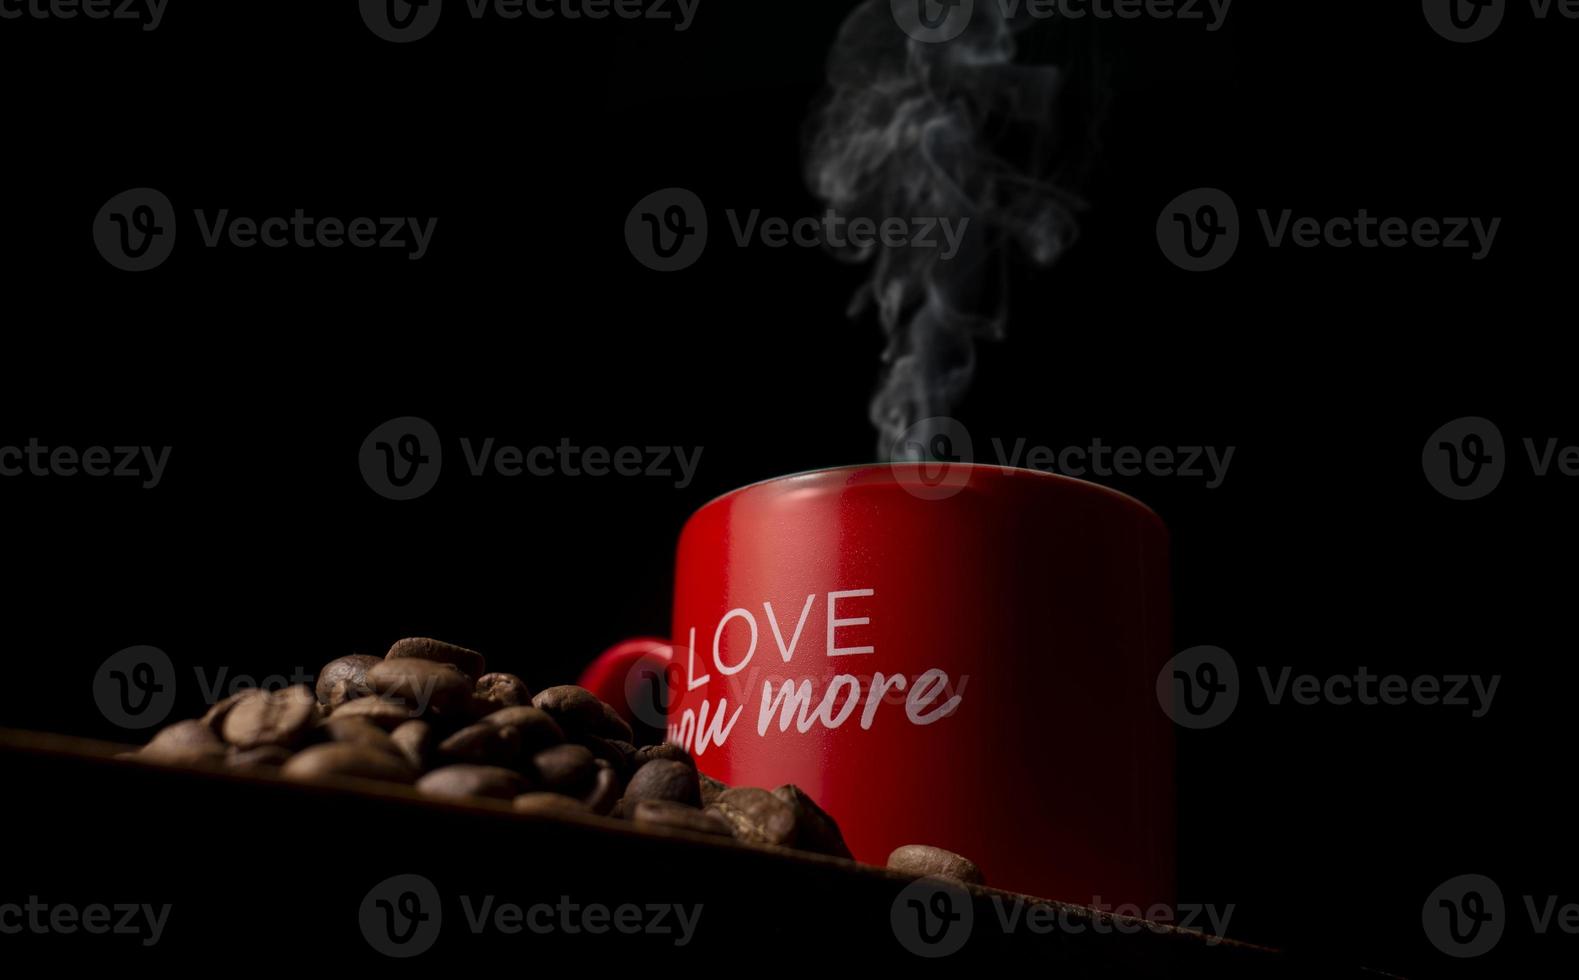 röd kaffekopp på träbord, kaffekorn, svart bakgrund foto